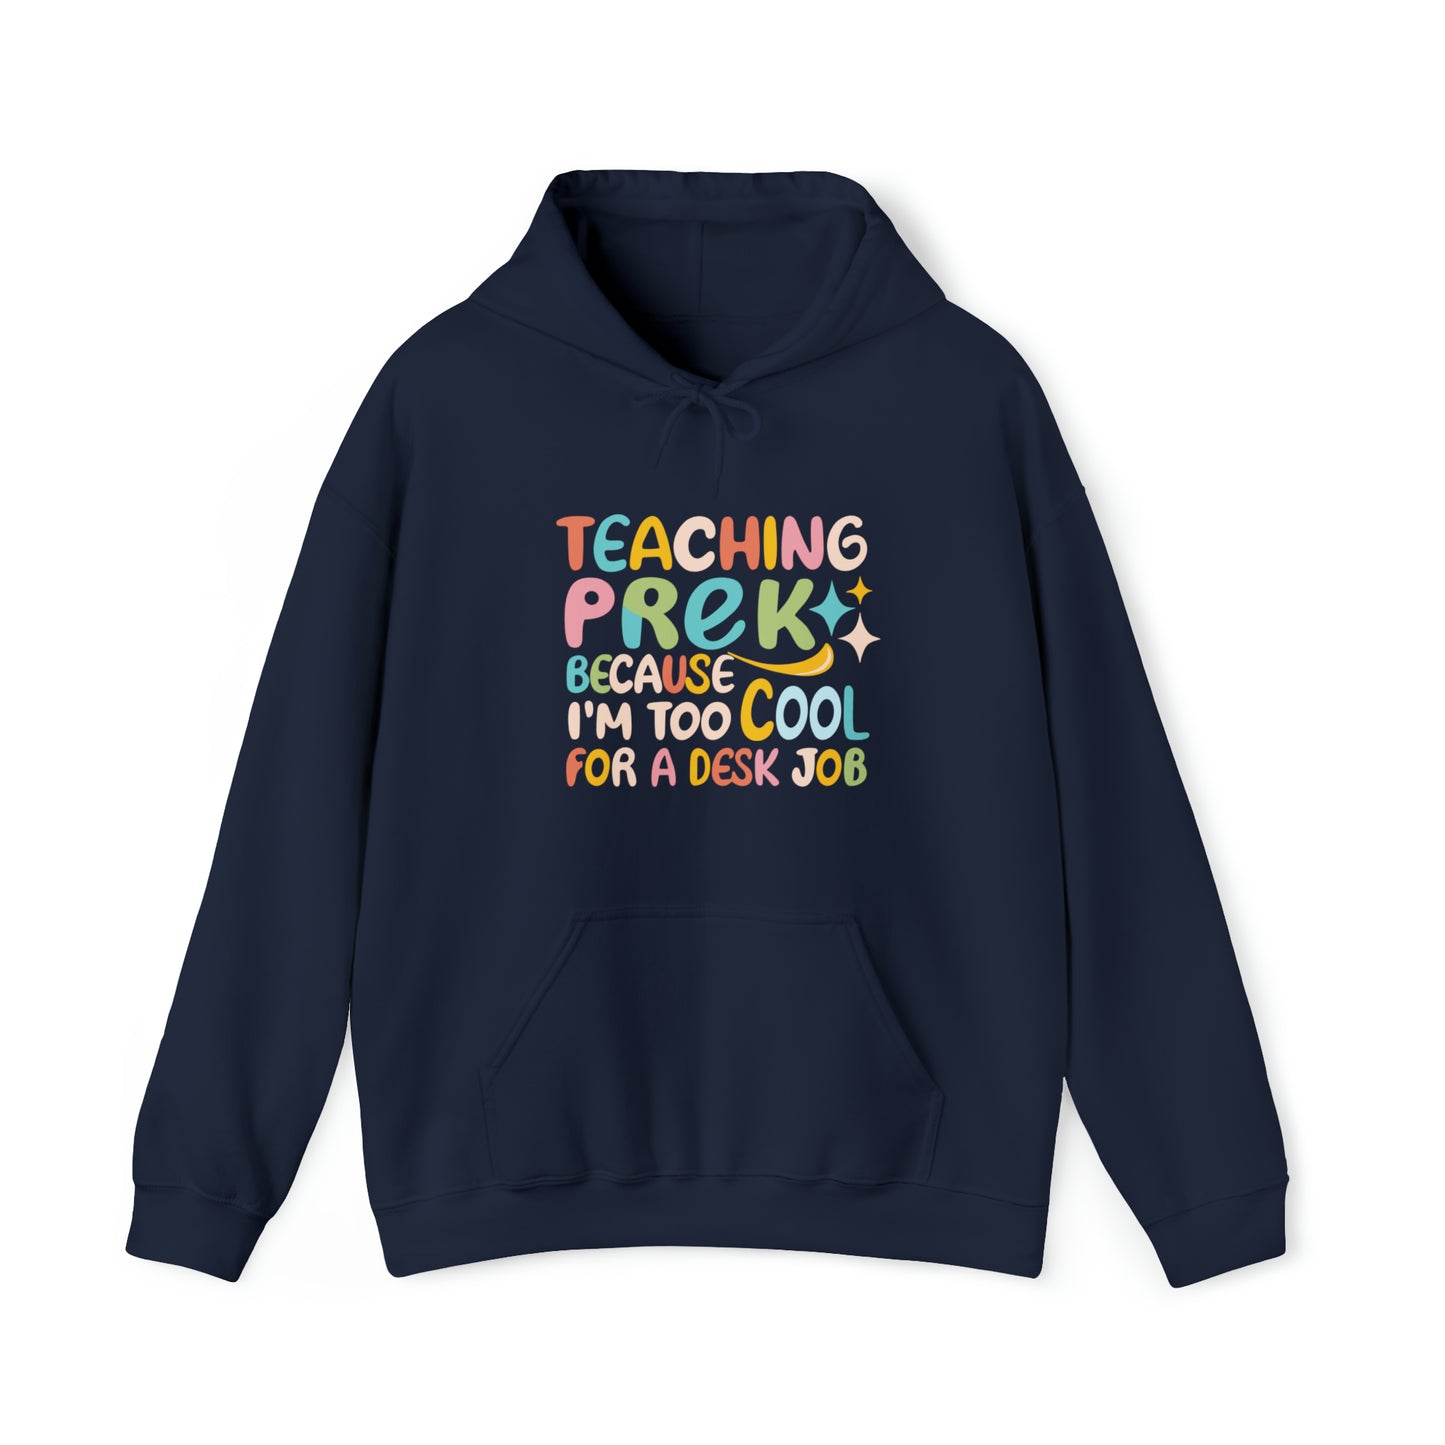 PreK Teacher Hoodie - "Teaching Preschool Because I'm Too Cool for a Desk Job"